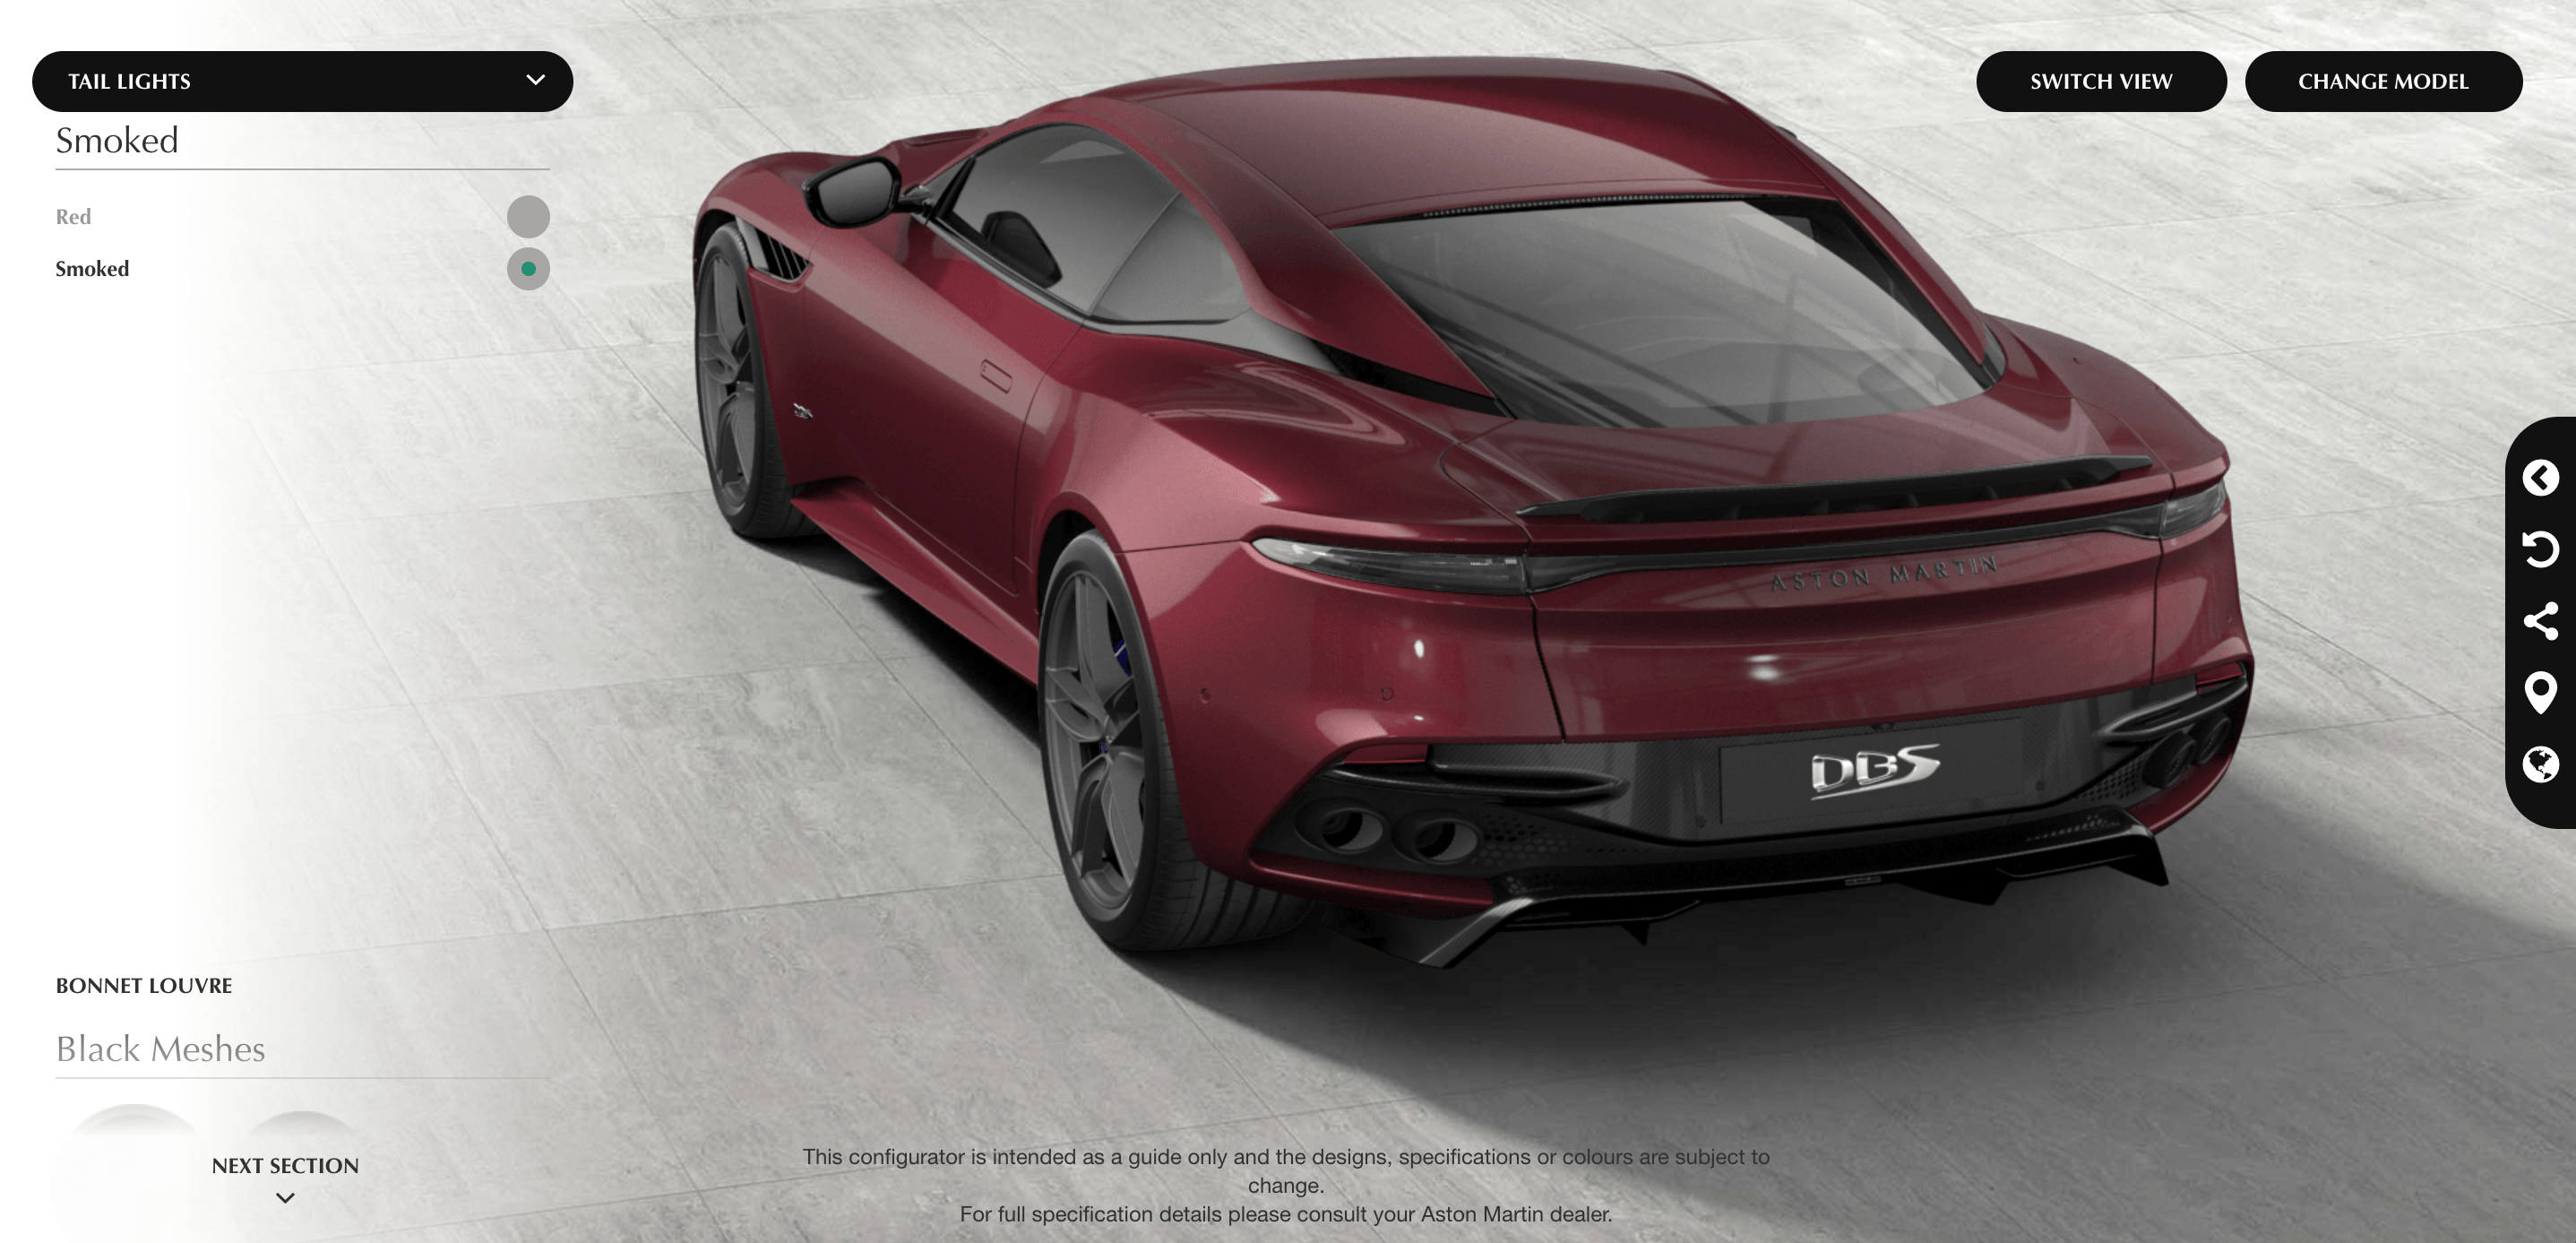 Here’s How You Should Configure Your 2019 Aston Martin DBS Superleggera